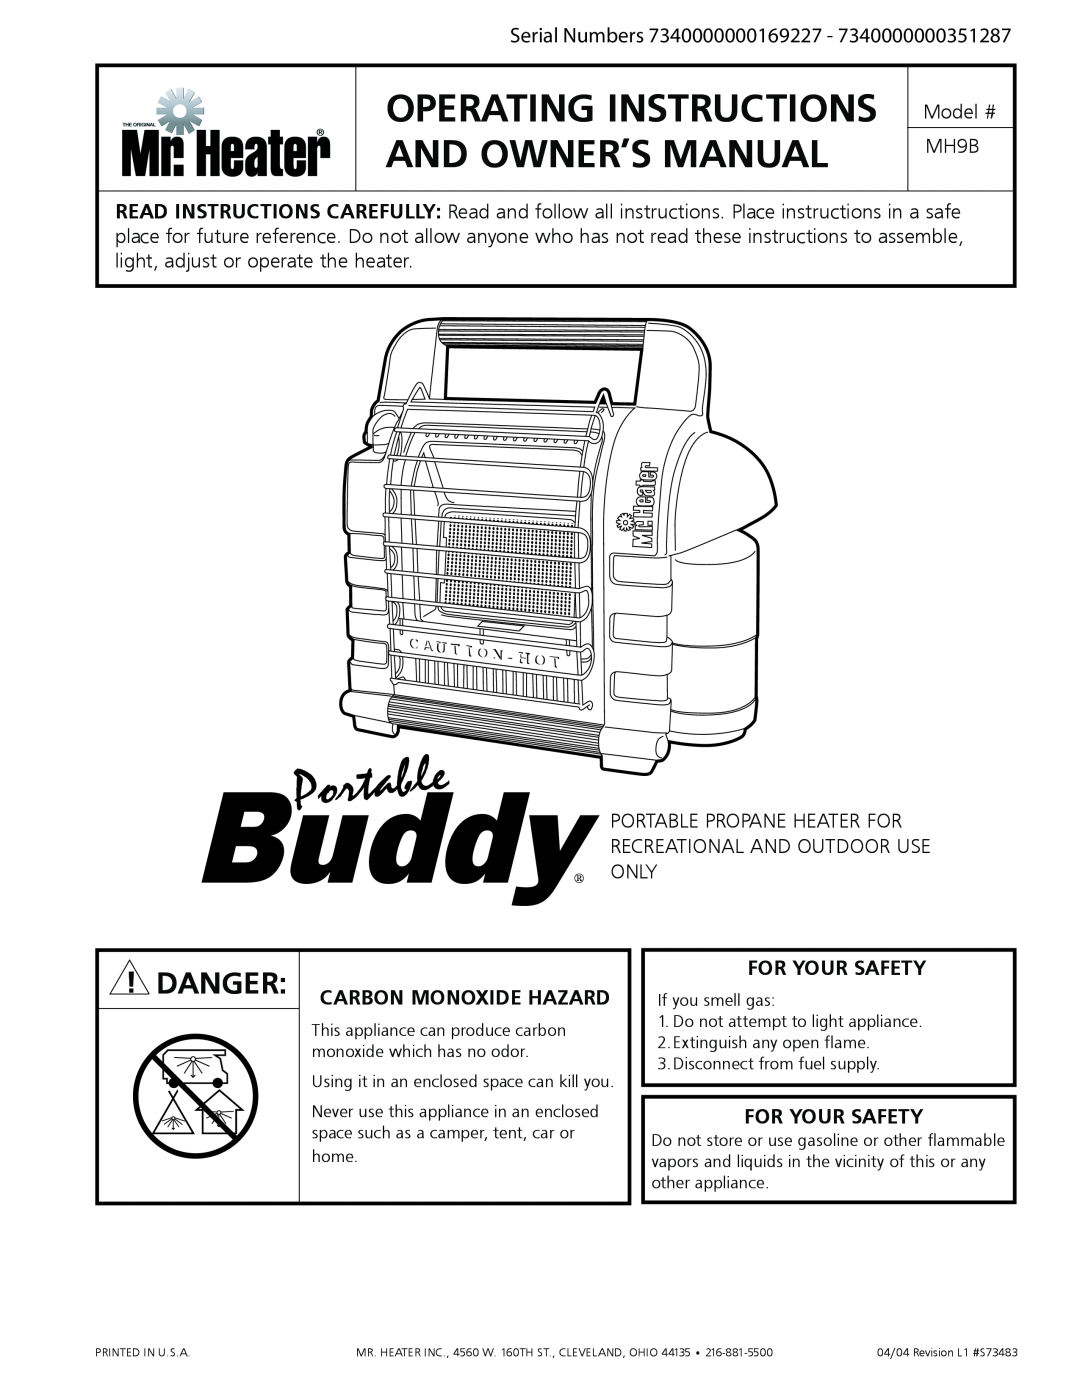 Mr. Heater MH9B owner manual Danger Carbon Monoxide Hazard, For Your Safety 